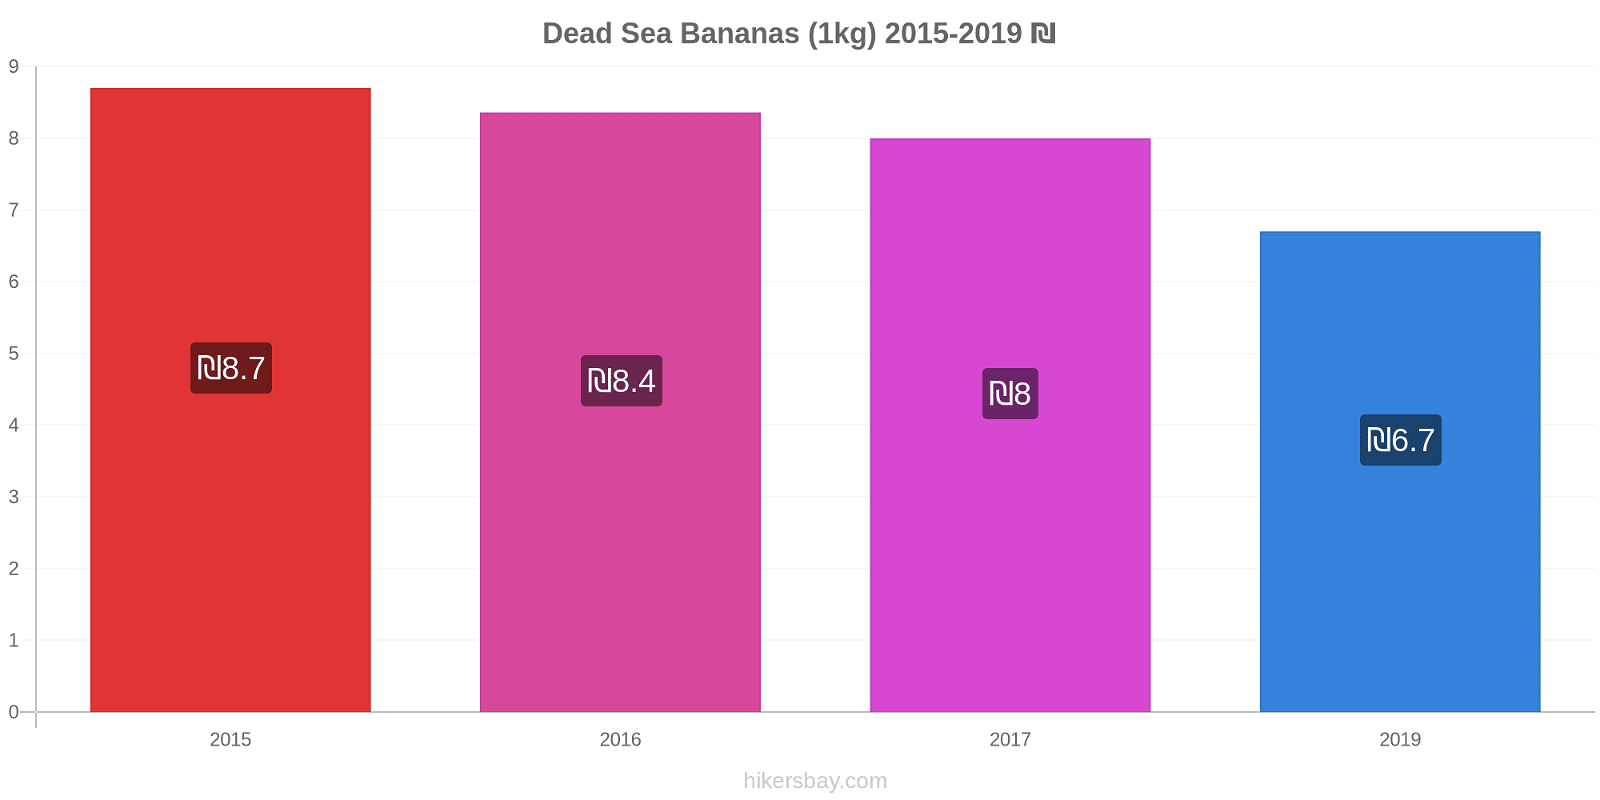 Dead Sea price changes Bananas (1kg) hikersbay.com